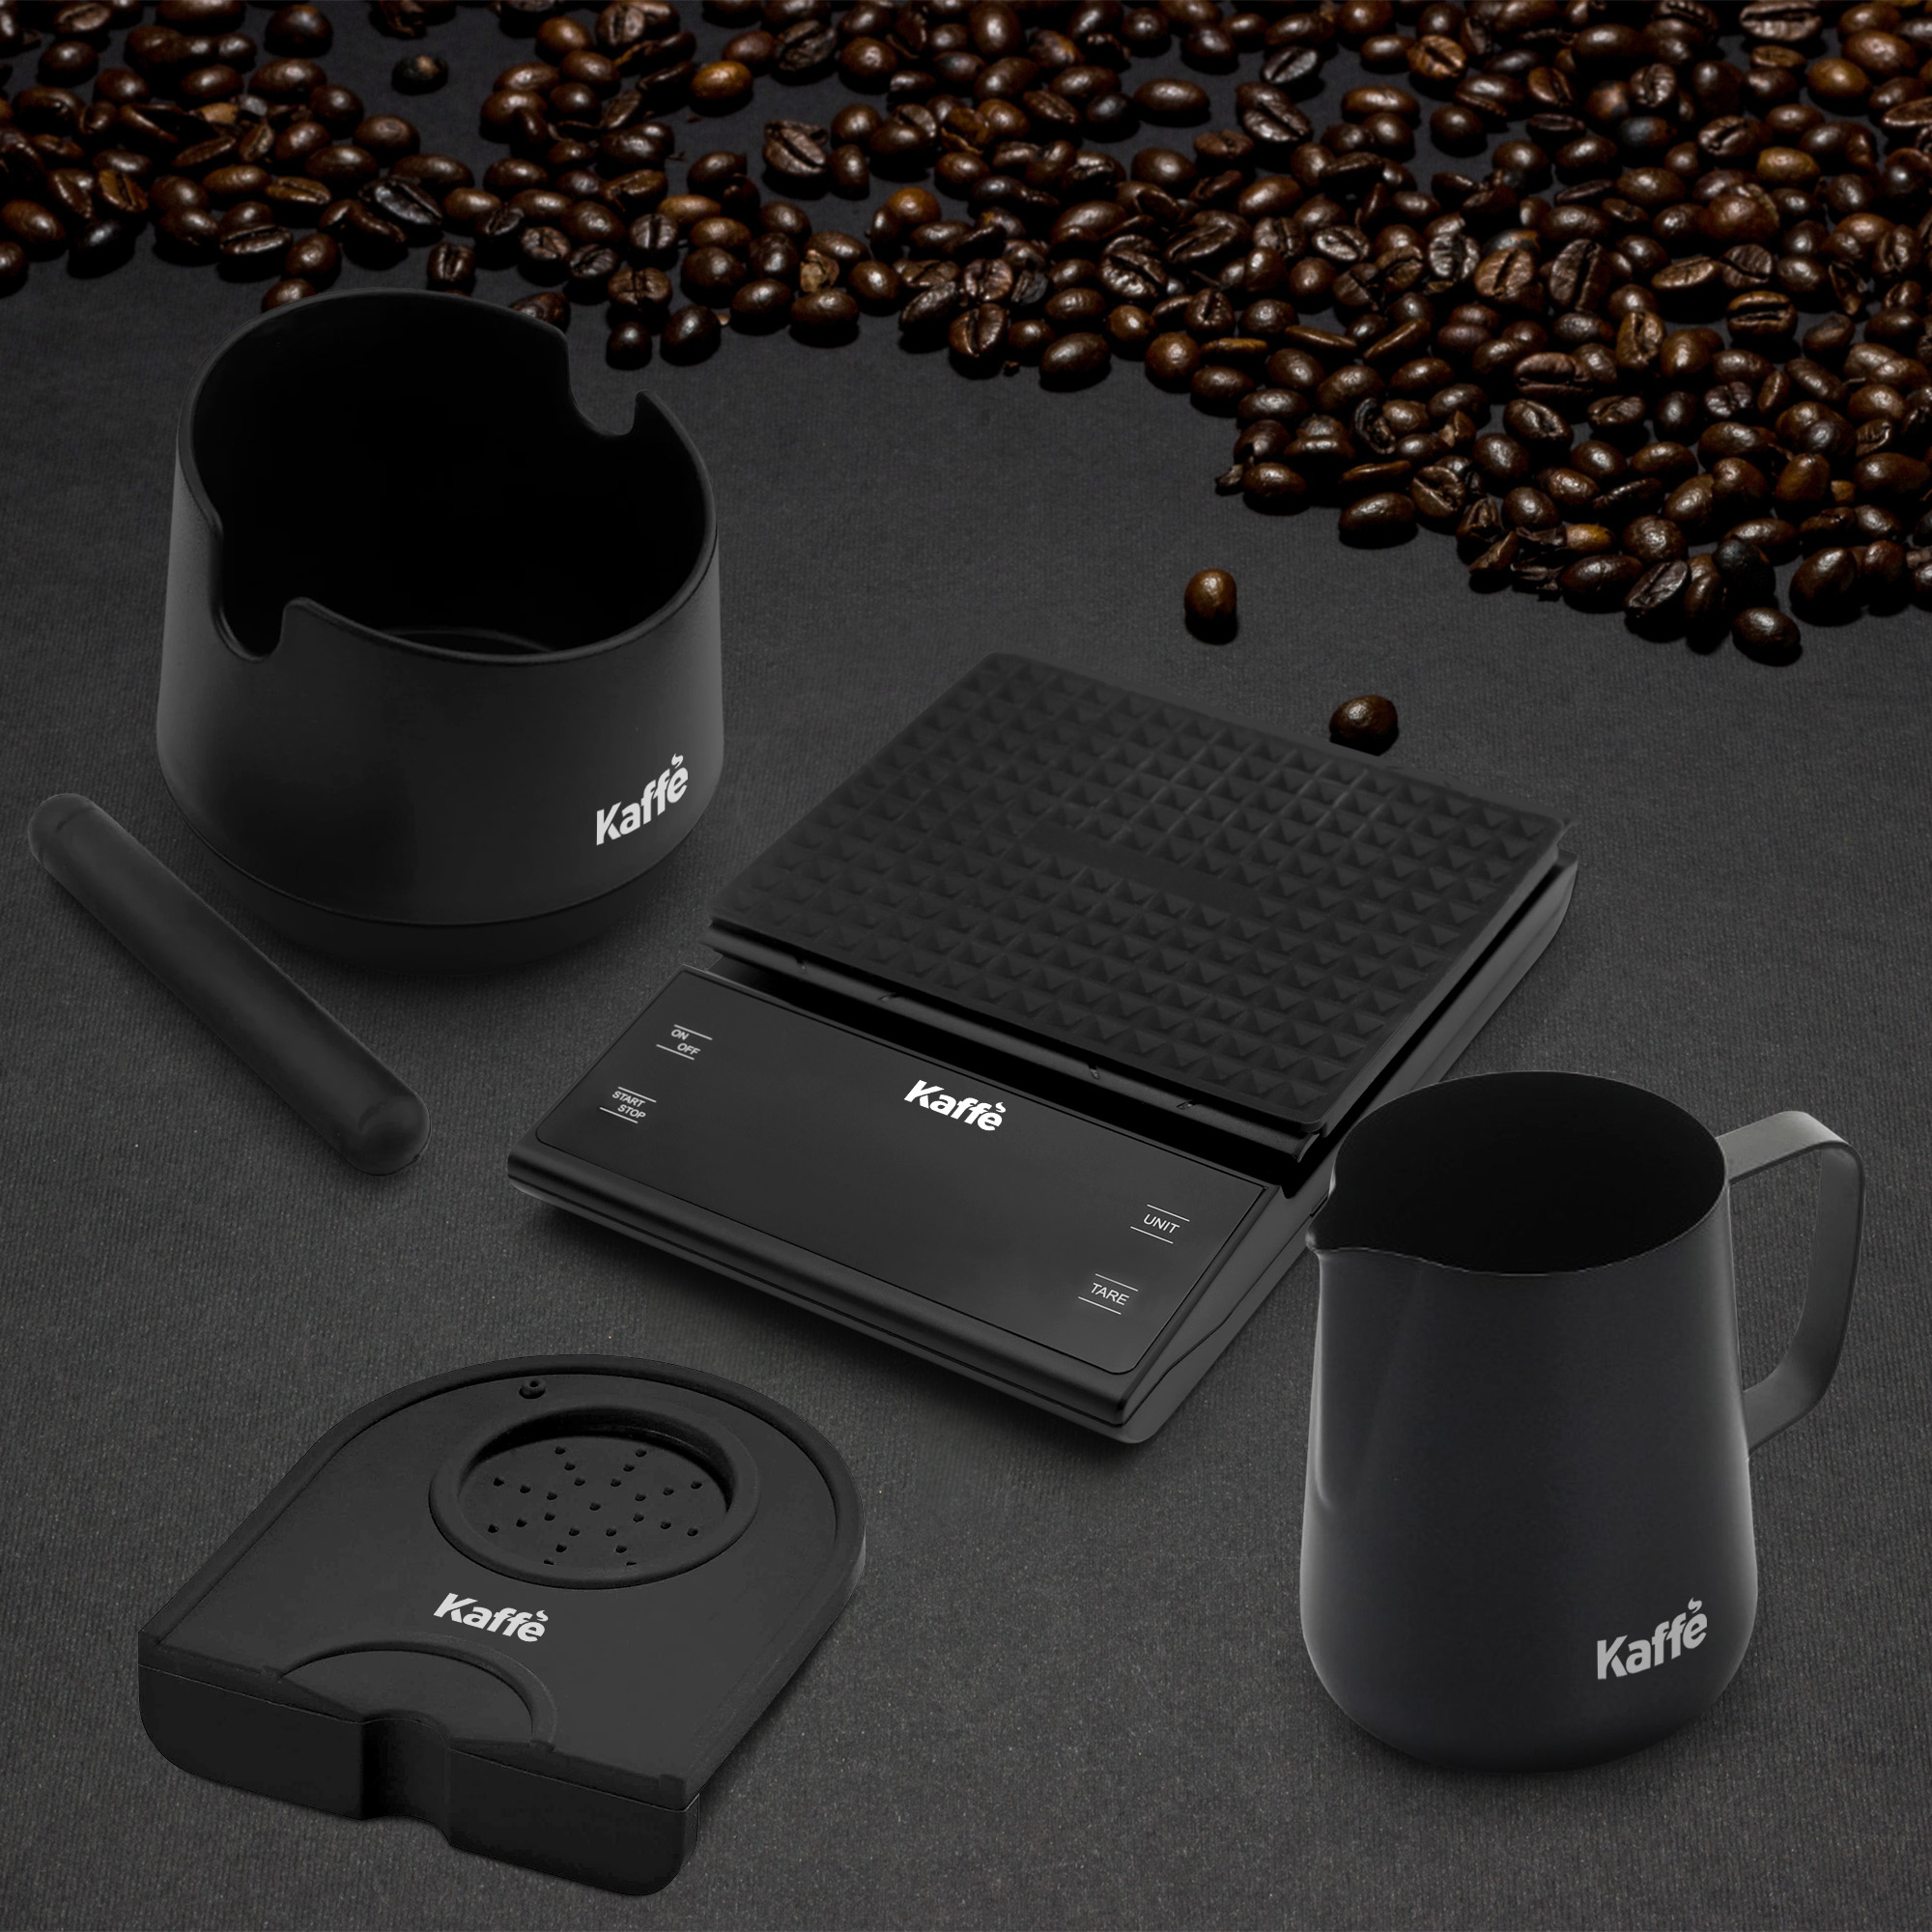 Kaffe Premium Espresso Accessories, 4 in 1 Bundle, Knock box, Digital Weighing scale, Tamper Mat, Milk Pitcher - image 3 of 5